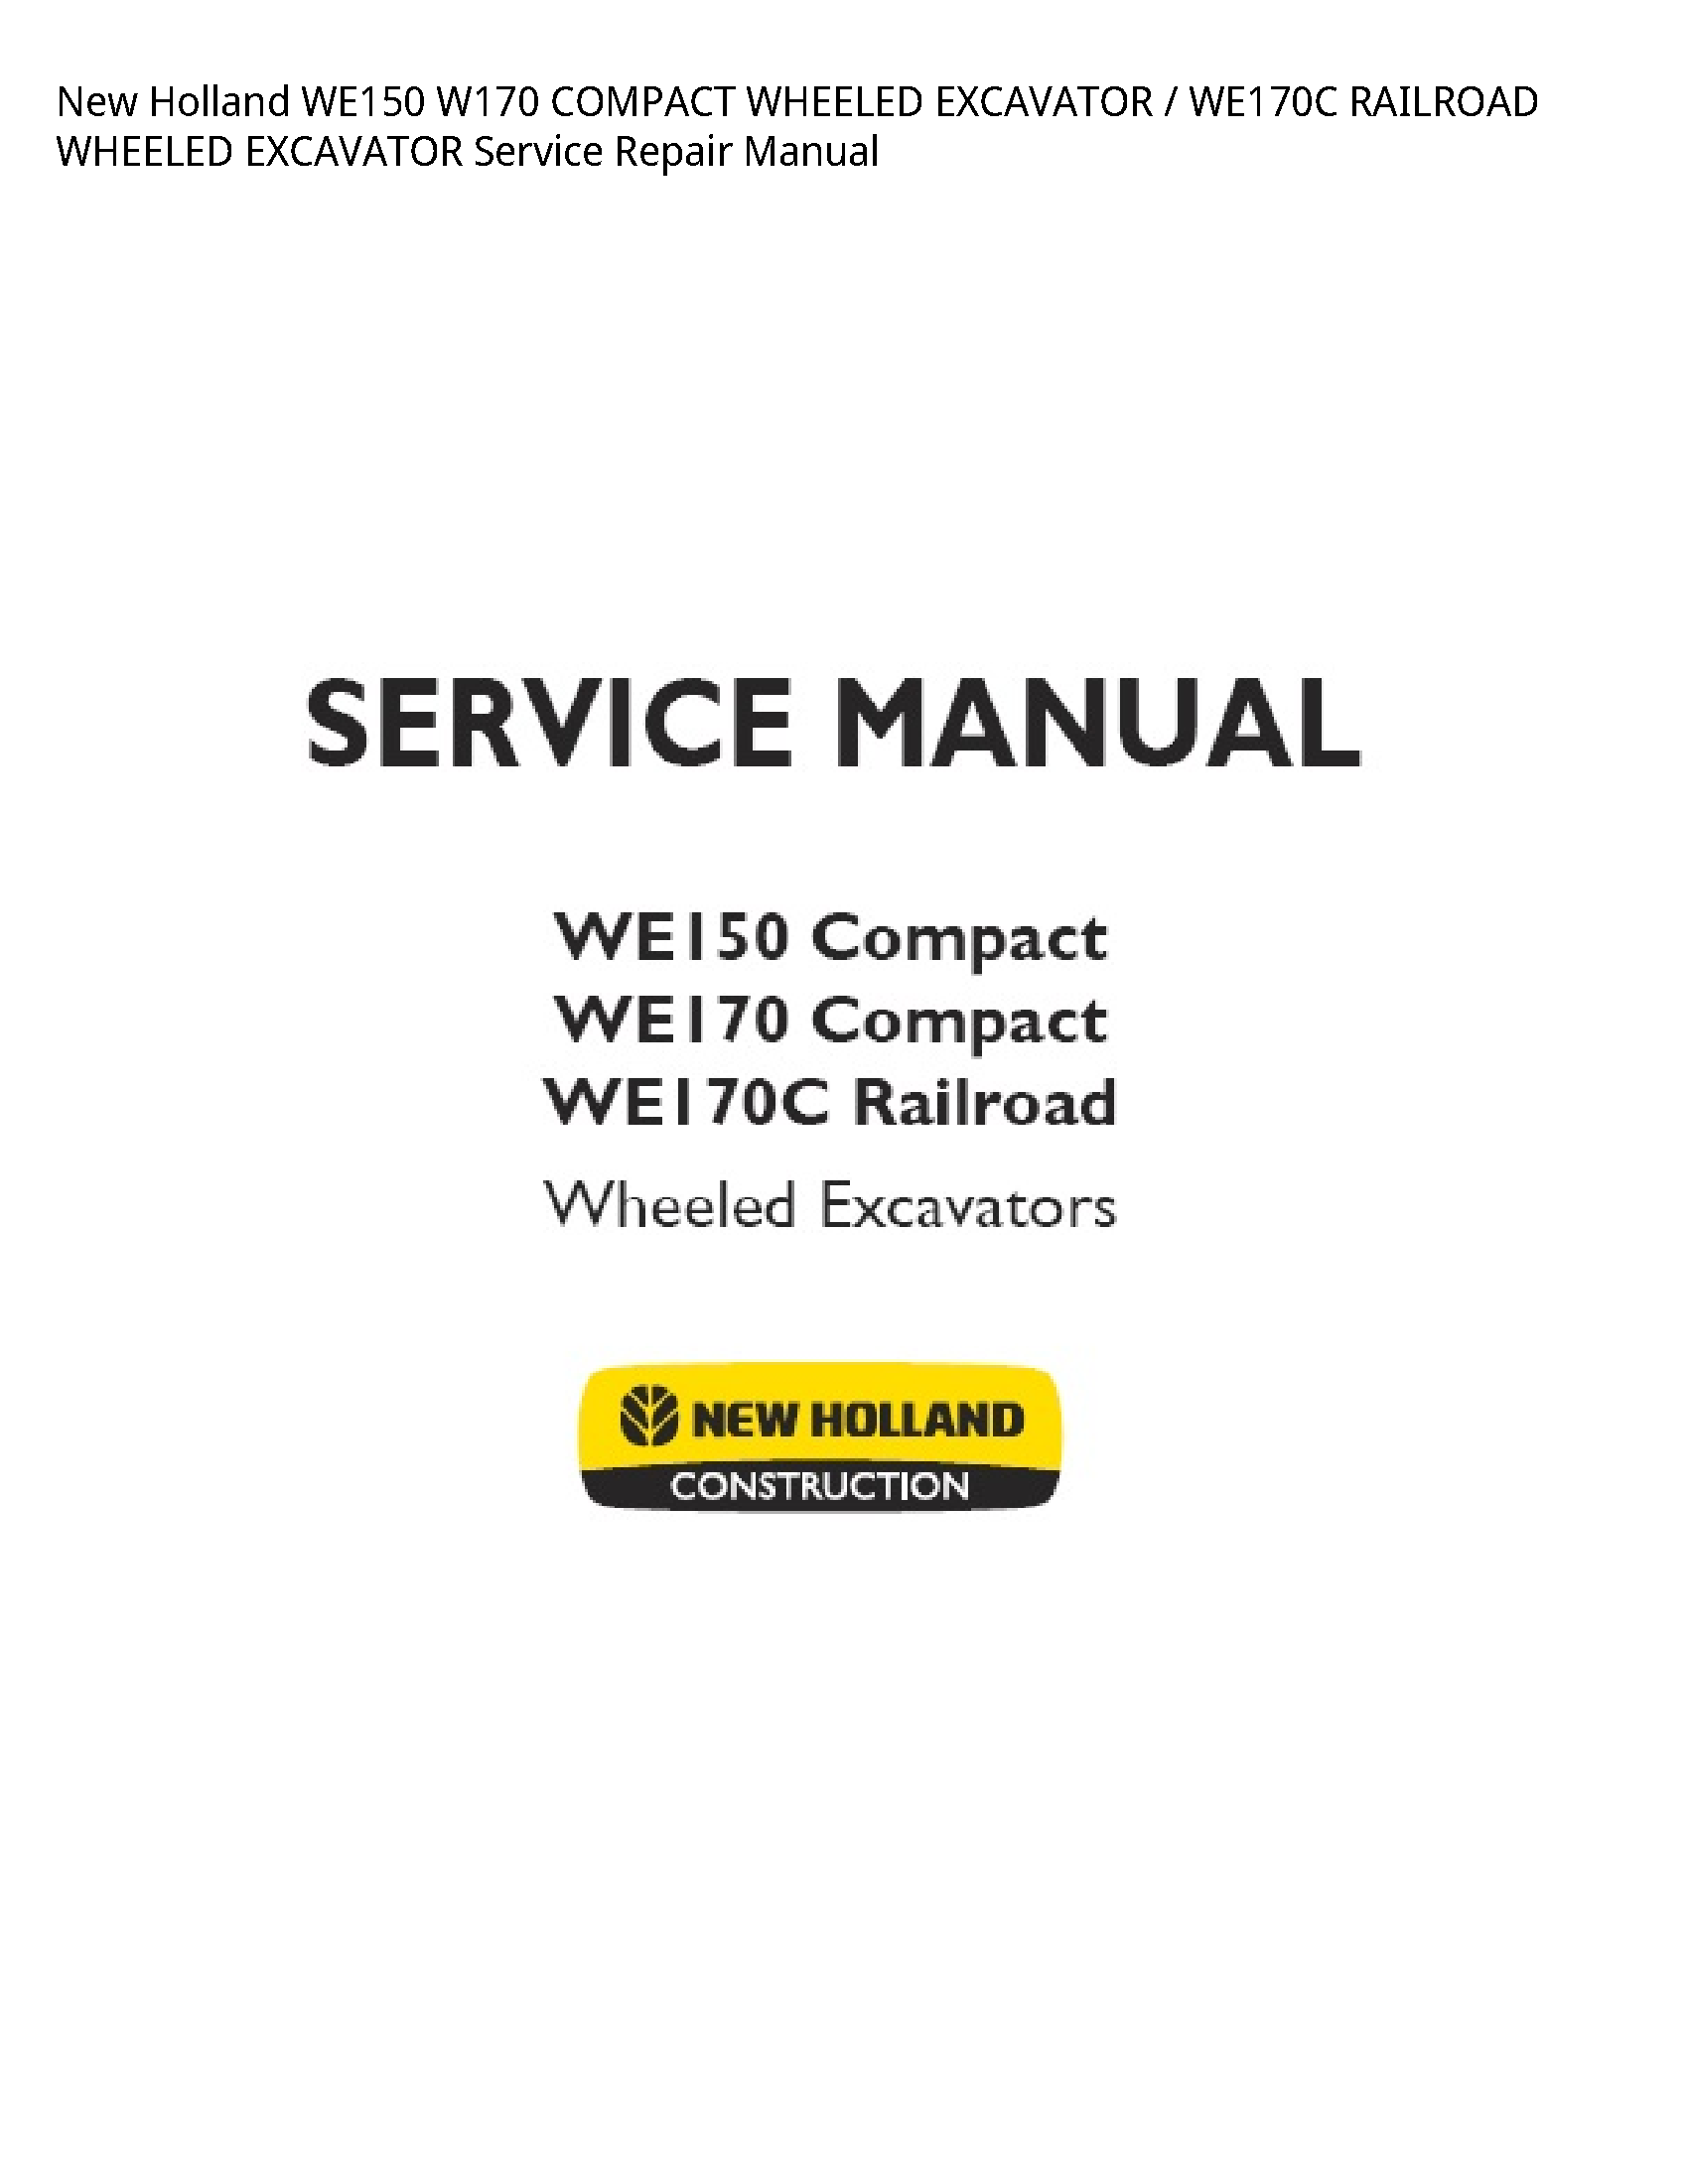 New Holland WE150 COMPACT WHEELED EXCAVATOR RAILROAD WHEELED EXCAVATOR manual